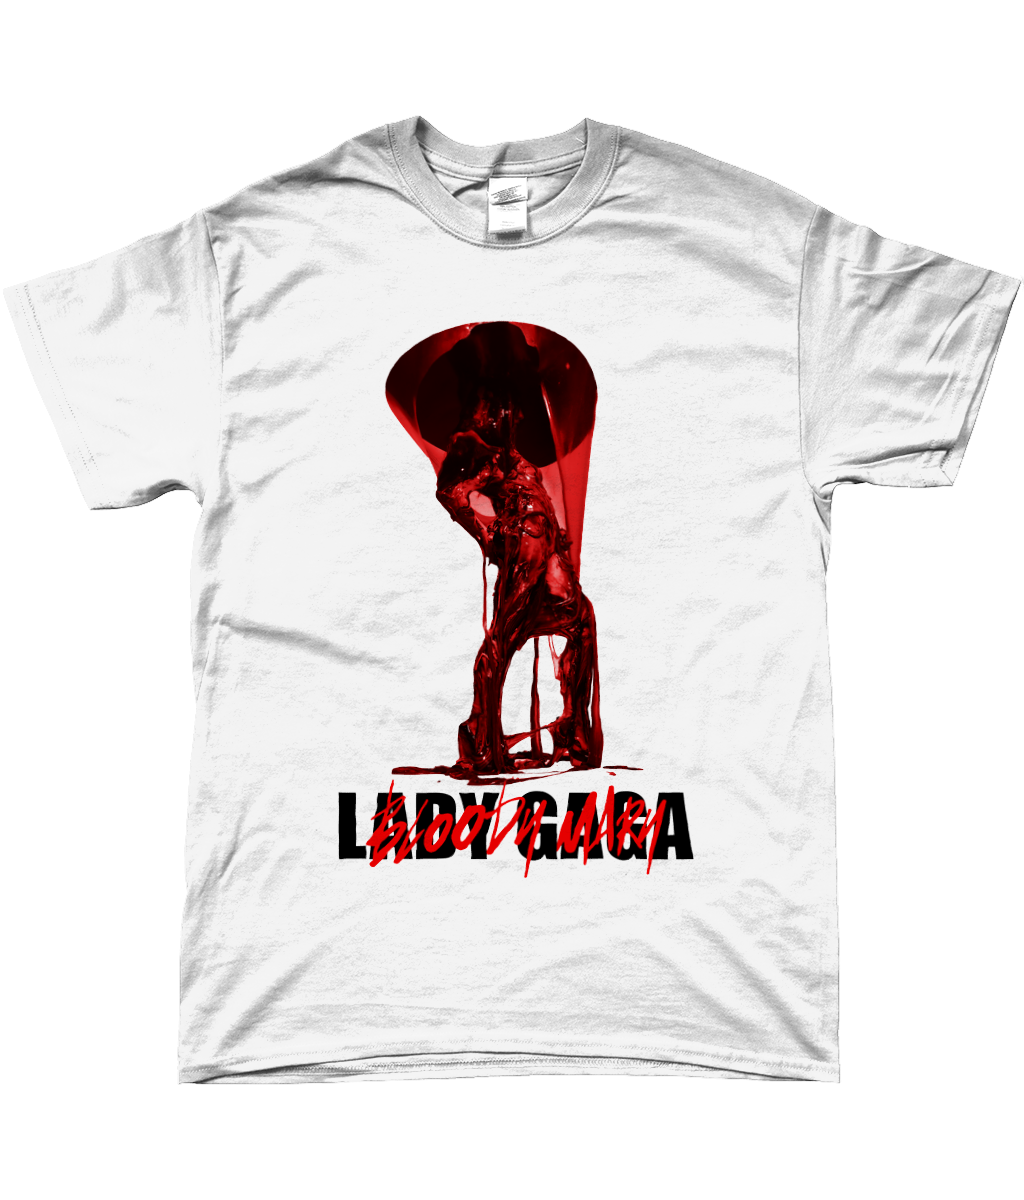 Lady Gaga Bloody Mary Born This Way Graphic T-Shirt